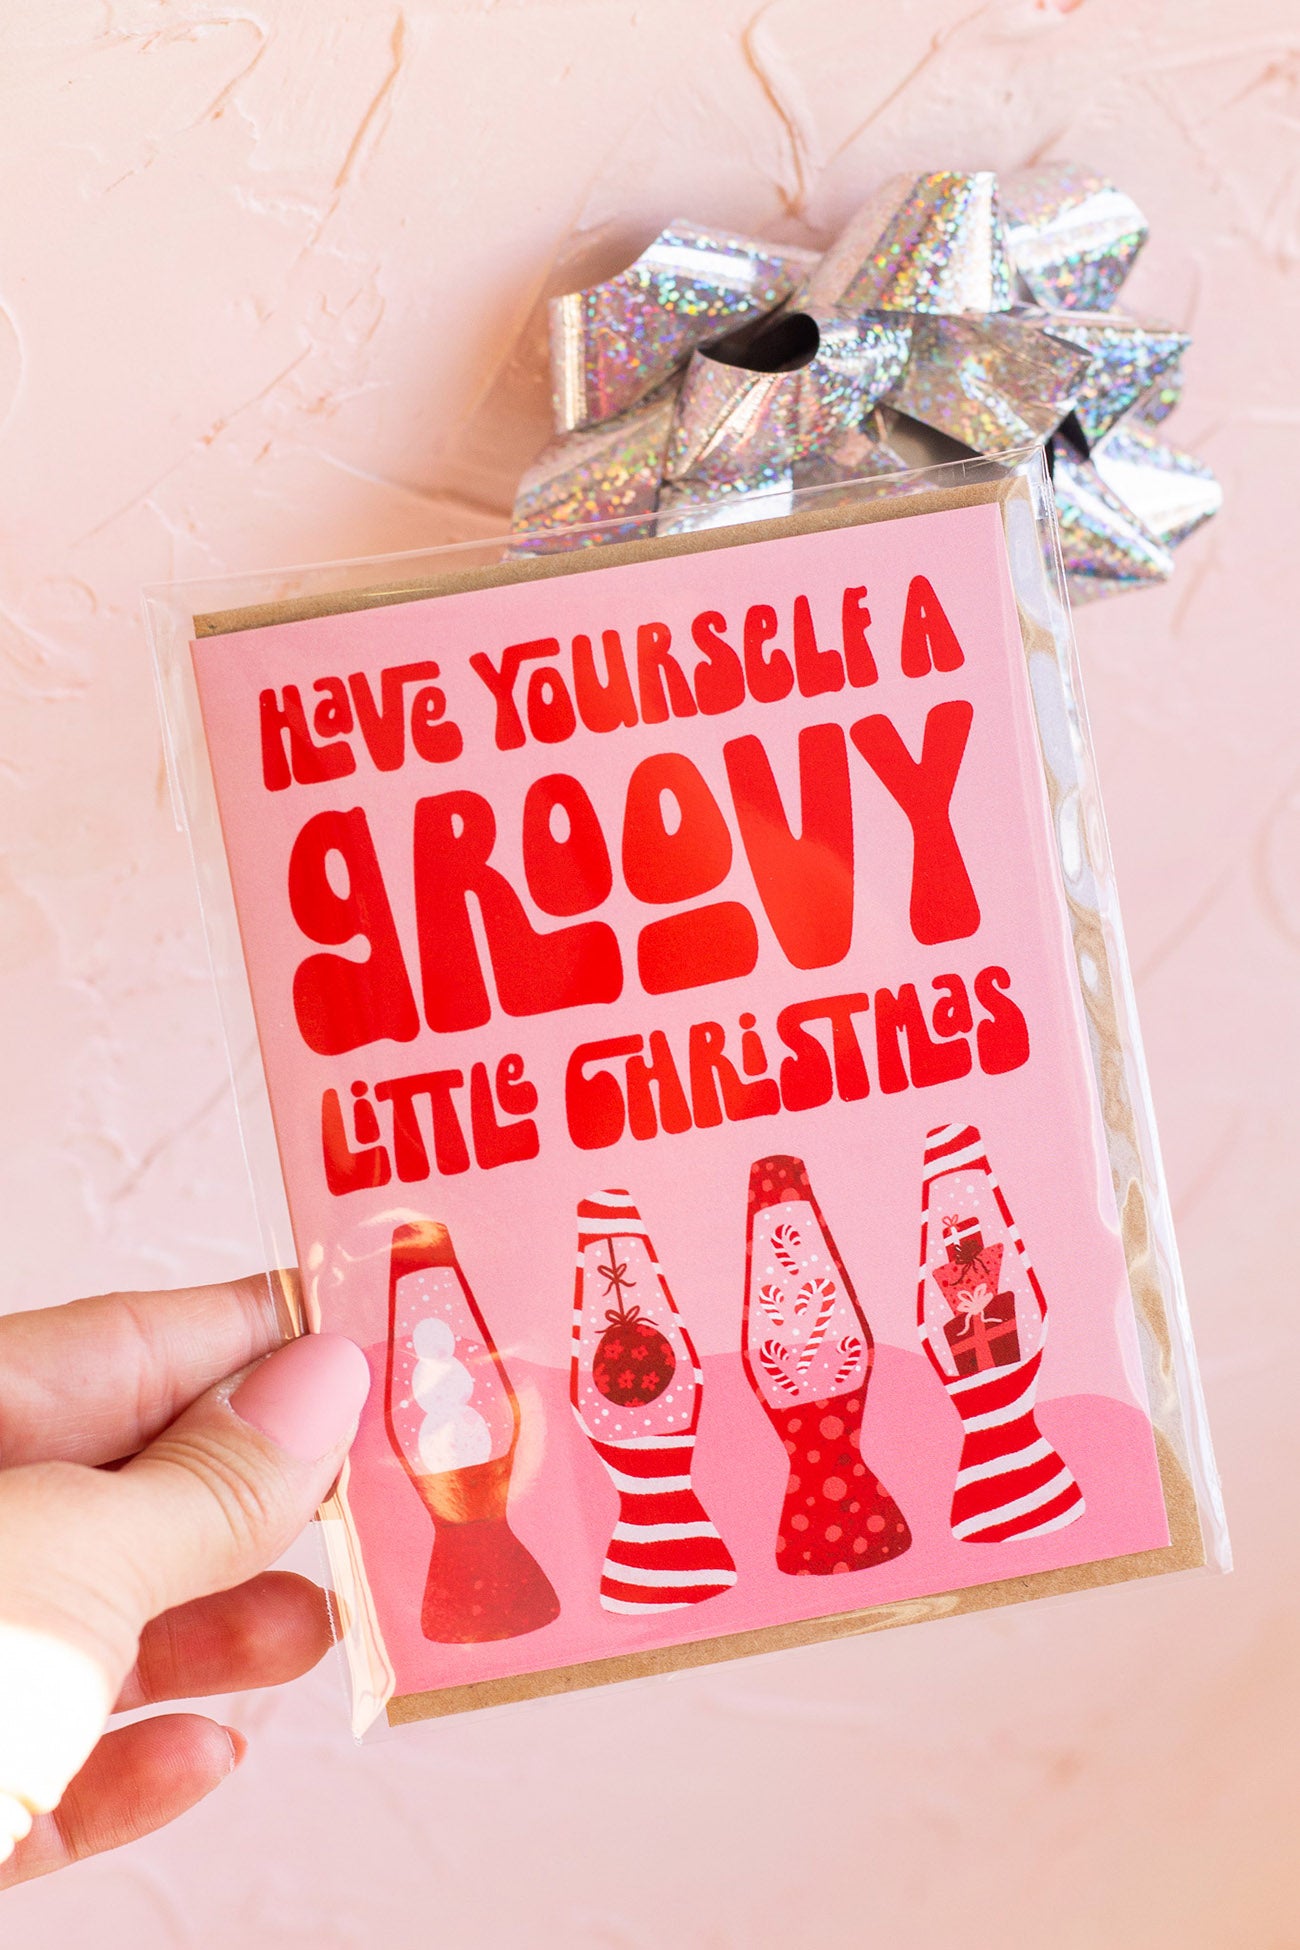 Groovy Little Christmas Greeting Card